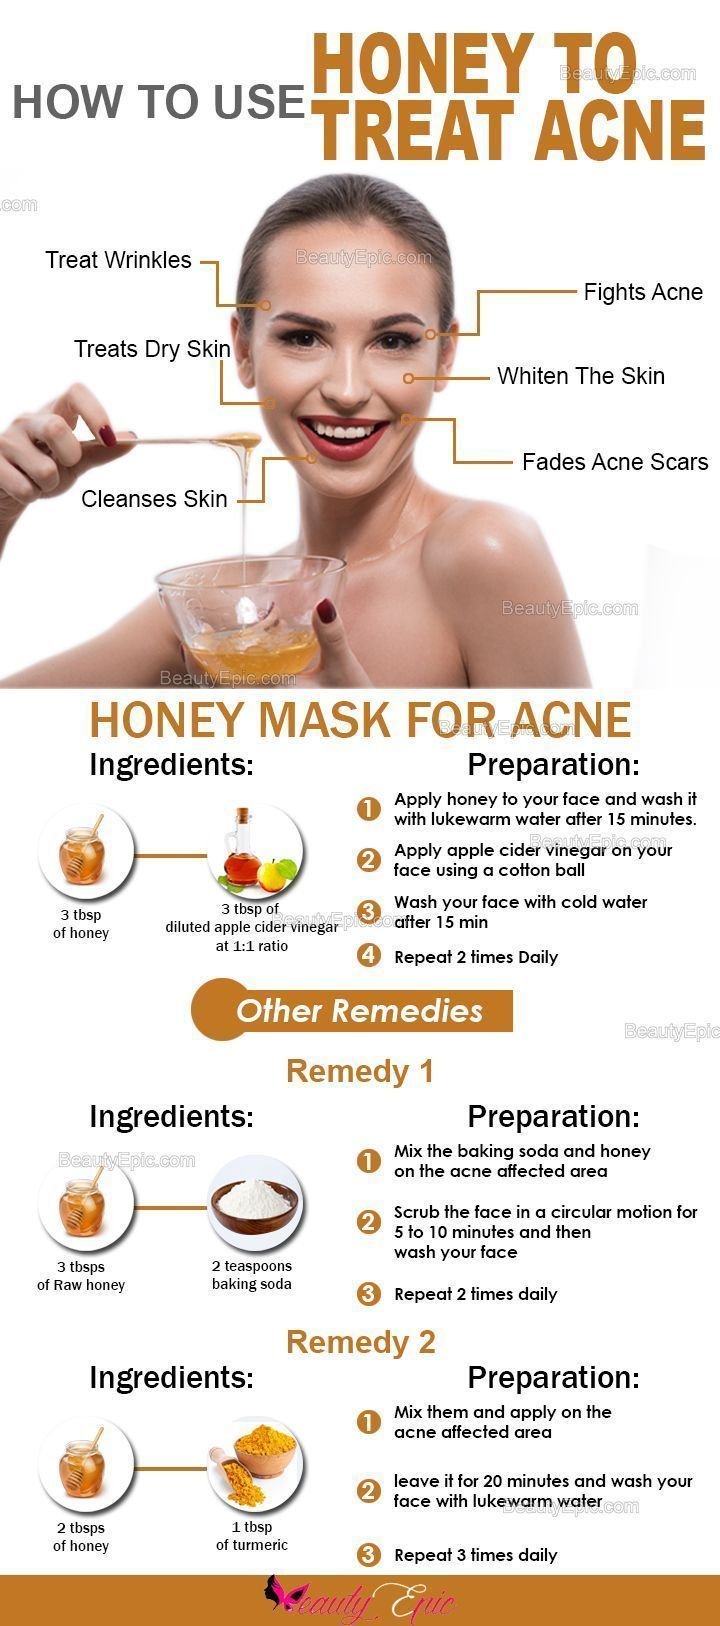 How to use Honey to Treat Acne